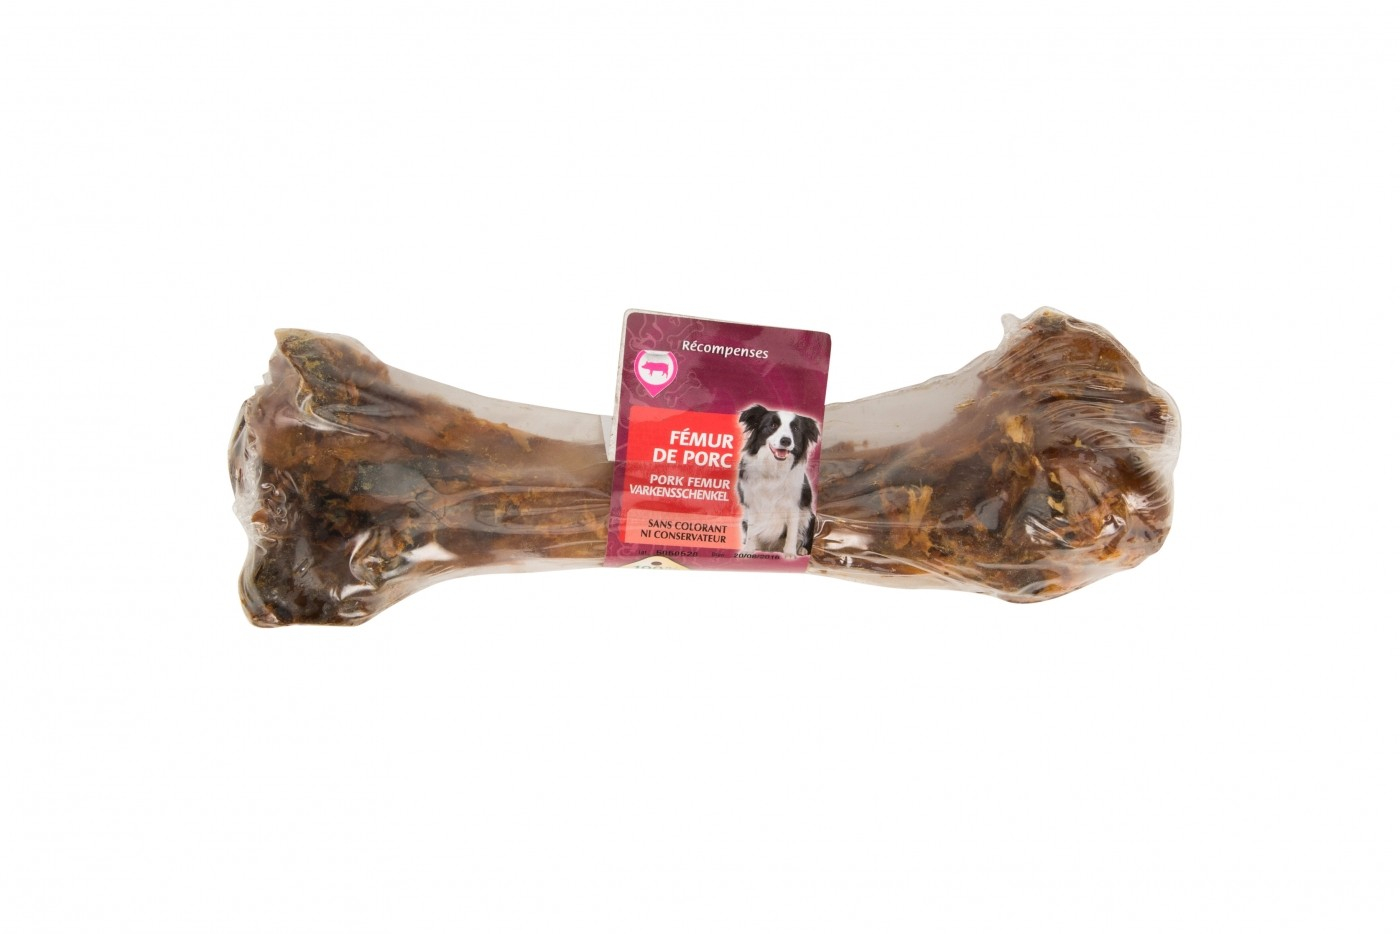 Snack per cane femore di maiale 100% Naturale